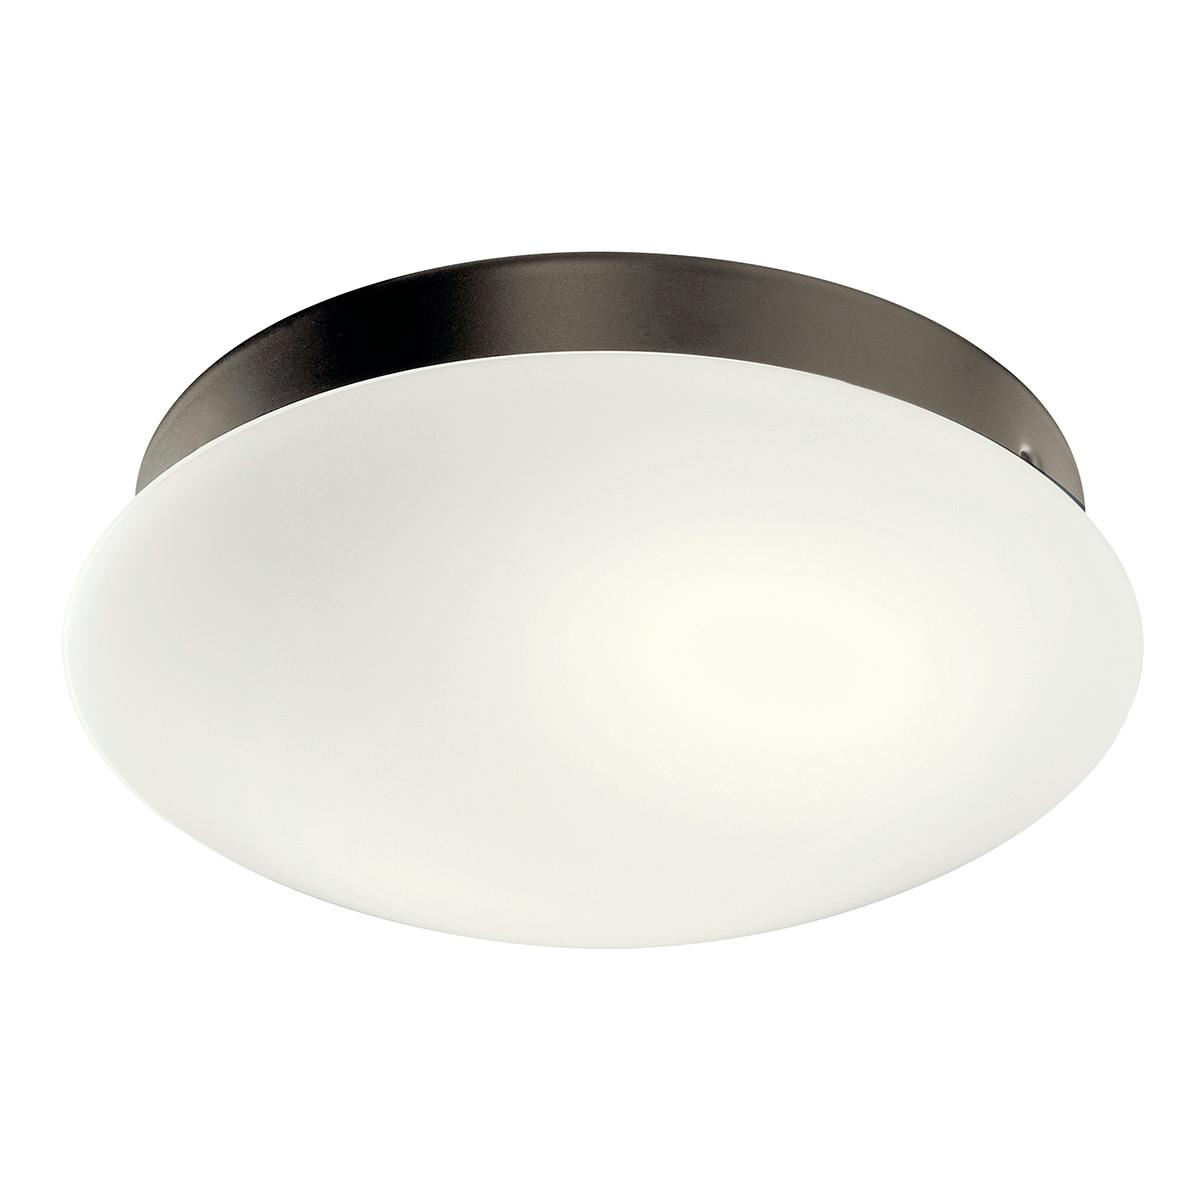 Ried™ LED Fan Light Kit Olde Bronze® on a white background